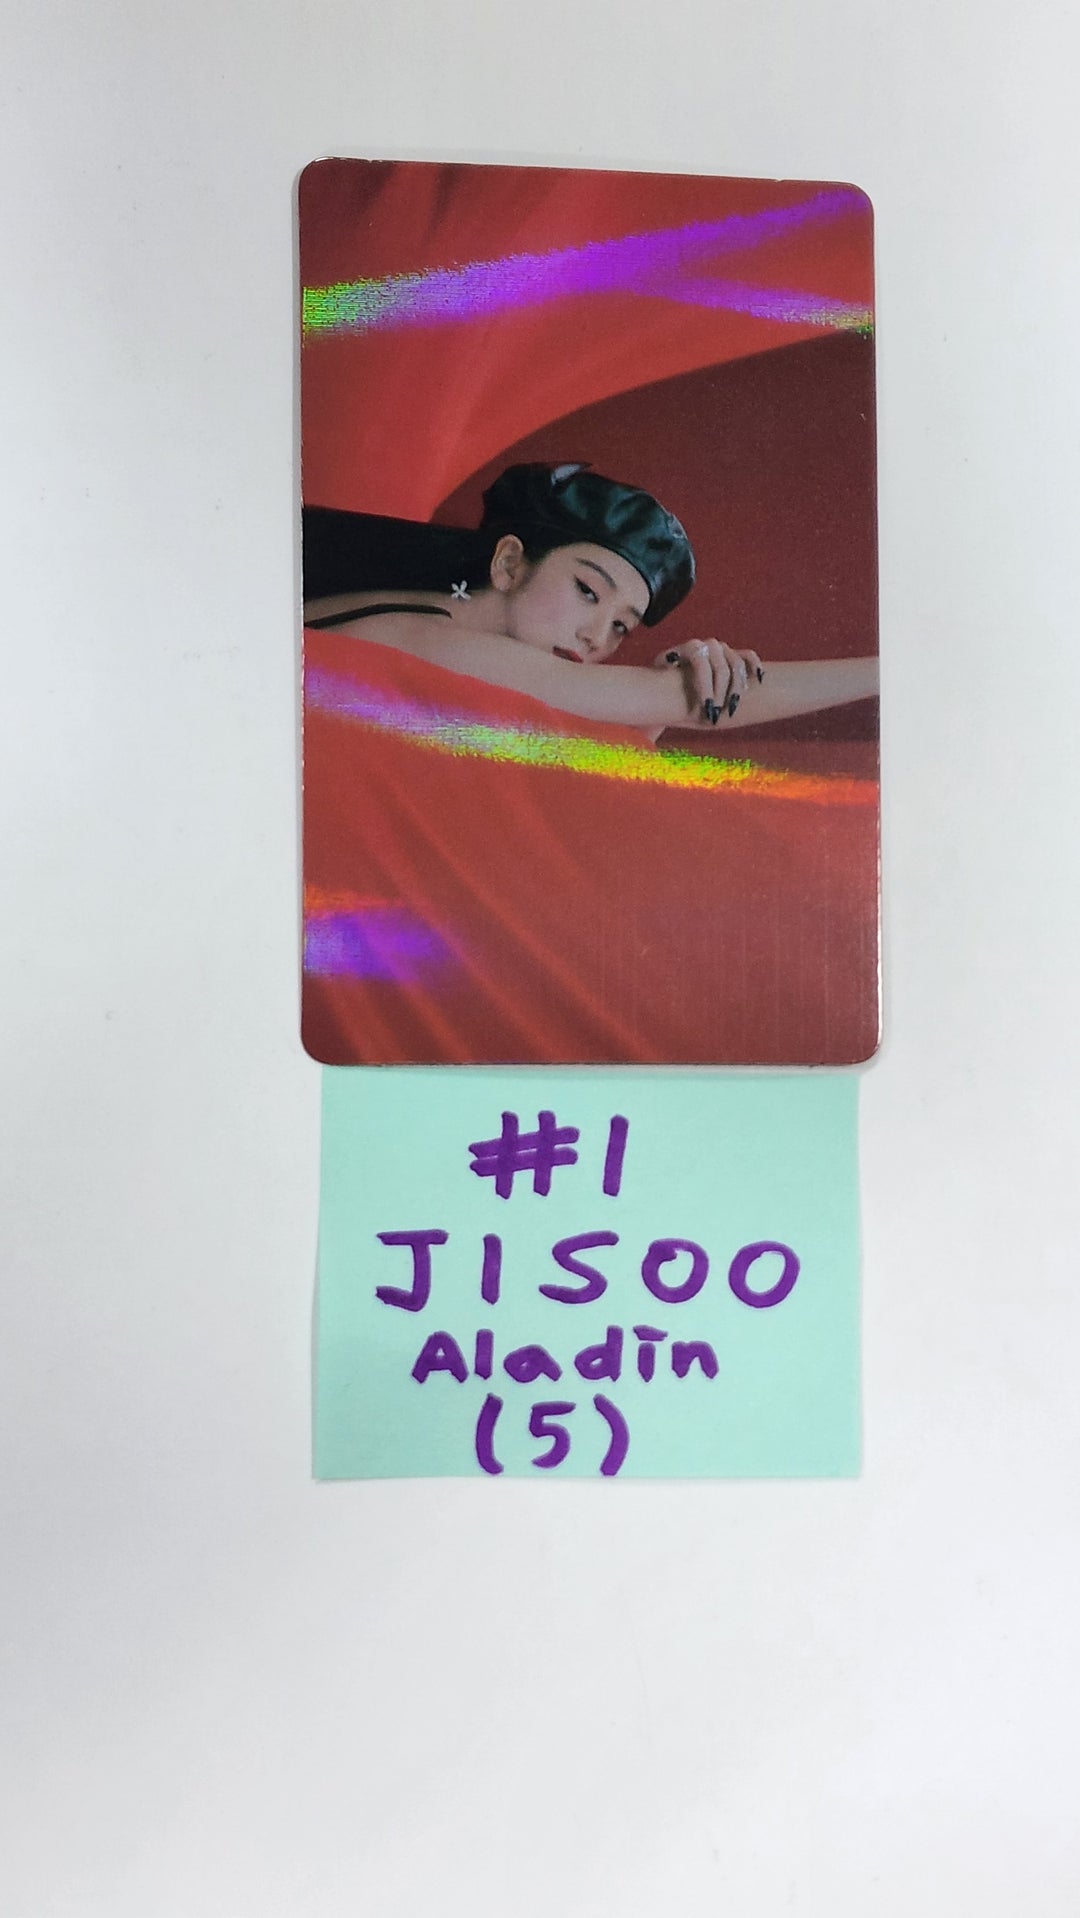 JISOO (Of Black Pink) "ME" 1st Single Album - Aladin 予約特典ホログラムフォトカード